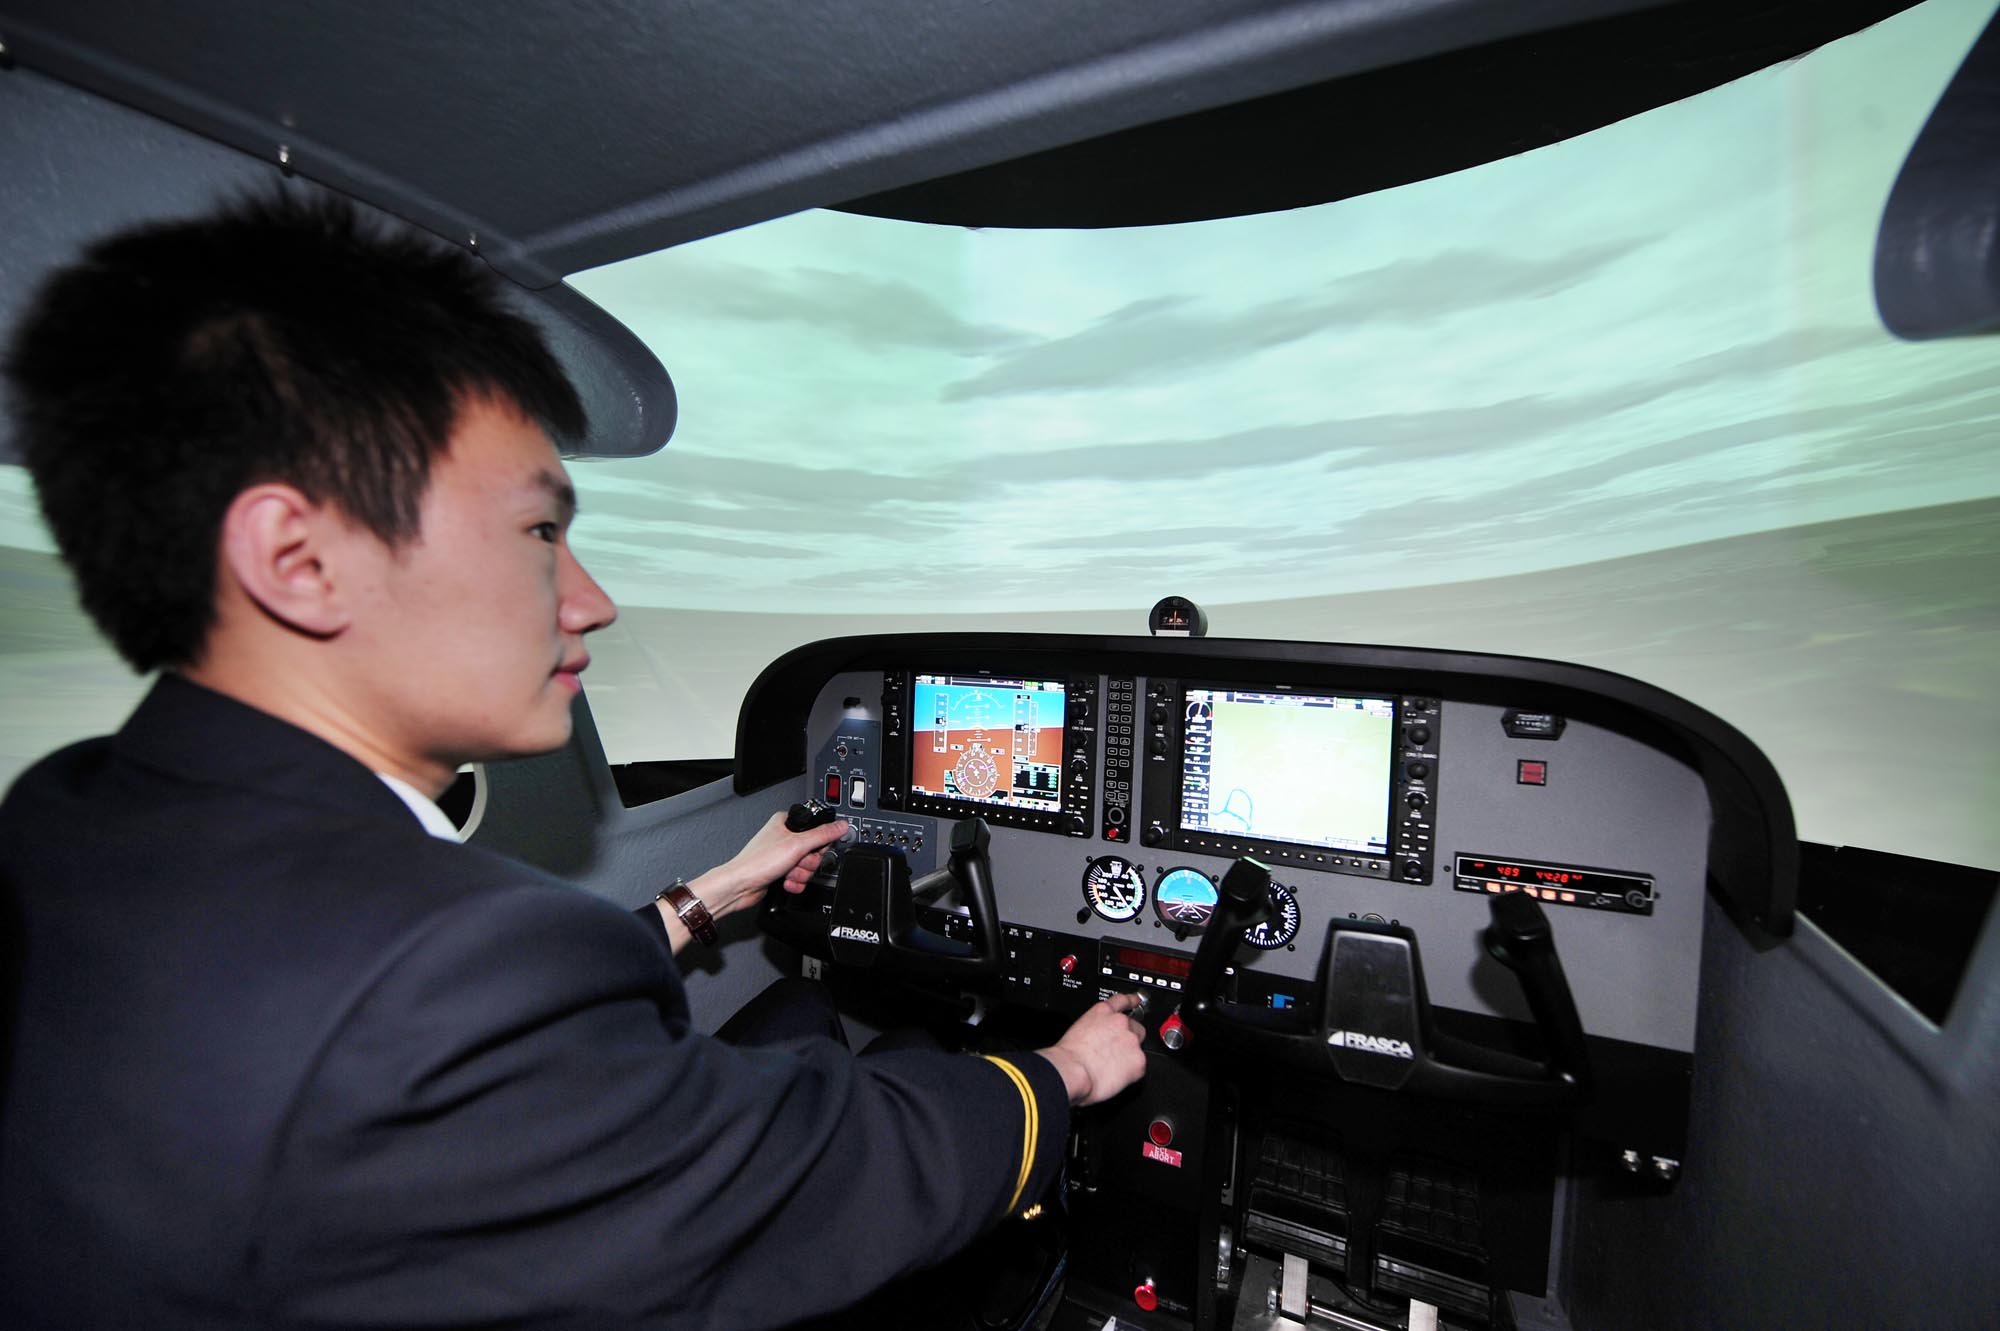 CYY_0408-6274学员在飞行模拟机上进行仿真训练。-记者陈勇摄